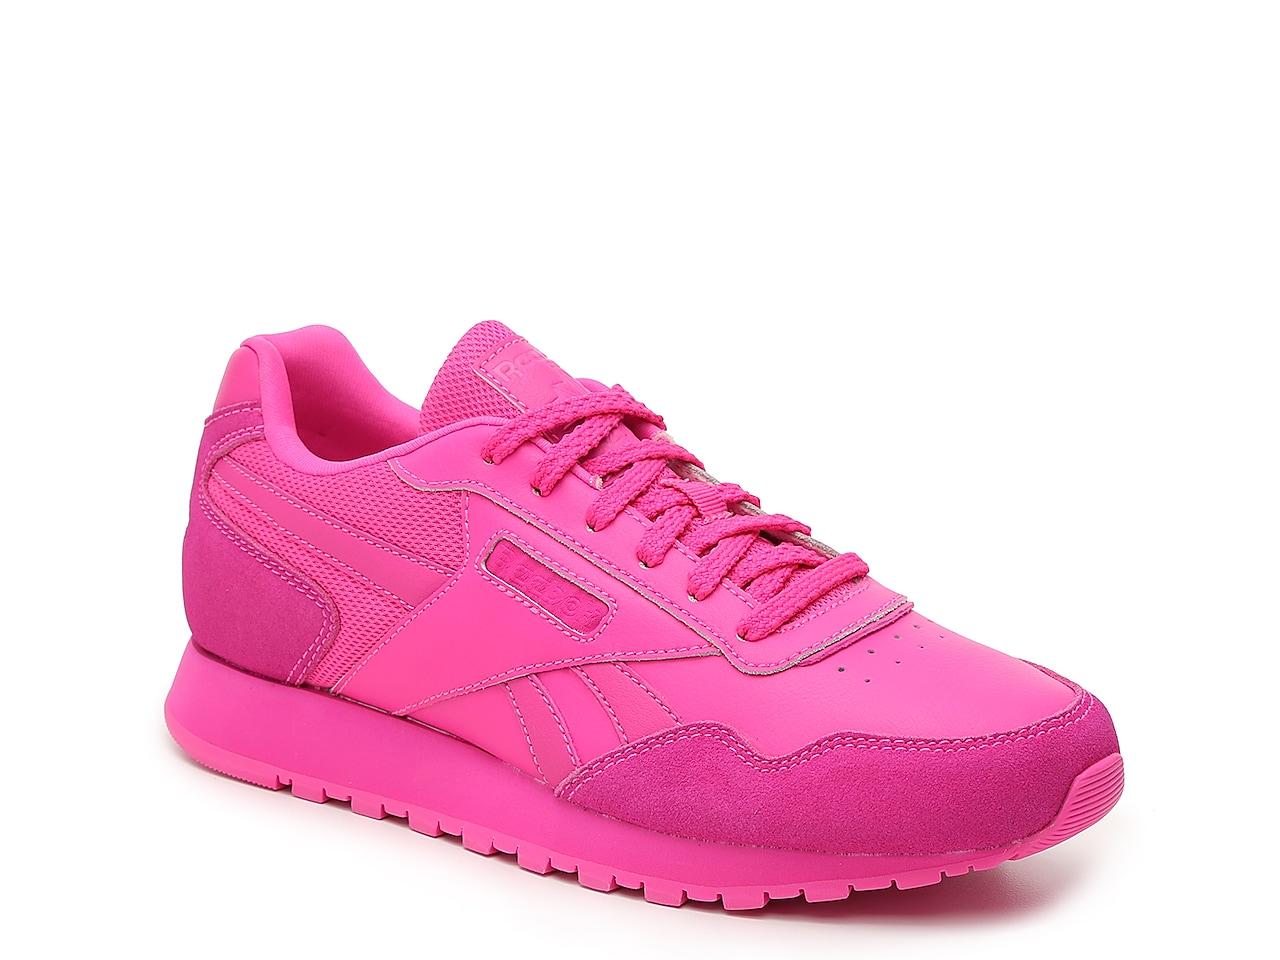 Reebok Classic Harman Run Sneaker in Hot Pink (Pink) - Lyst